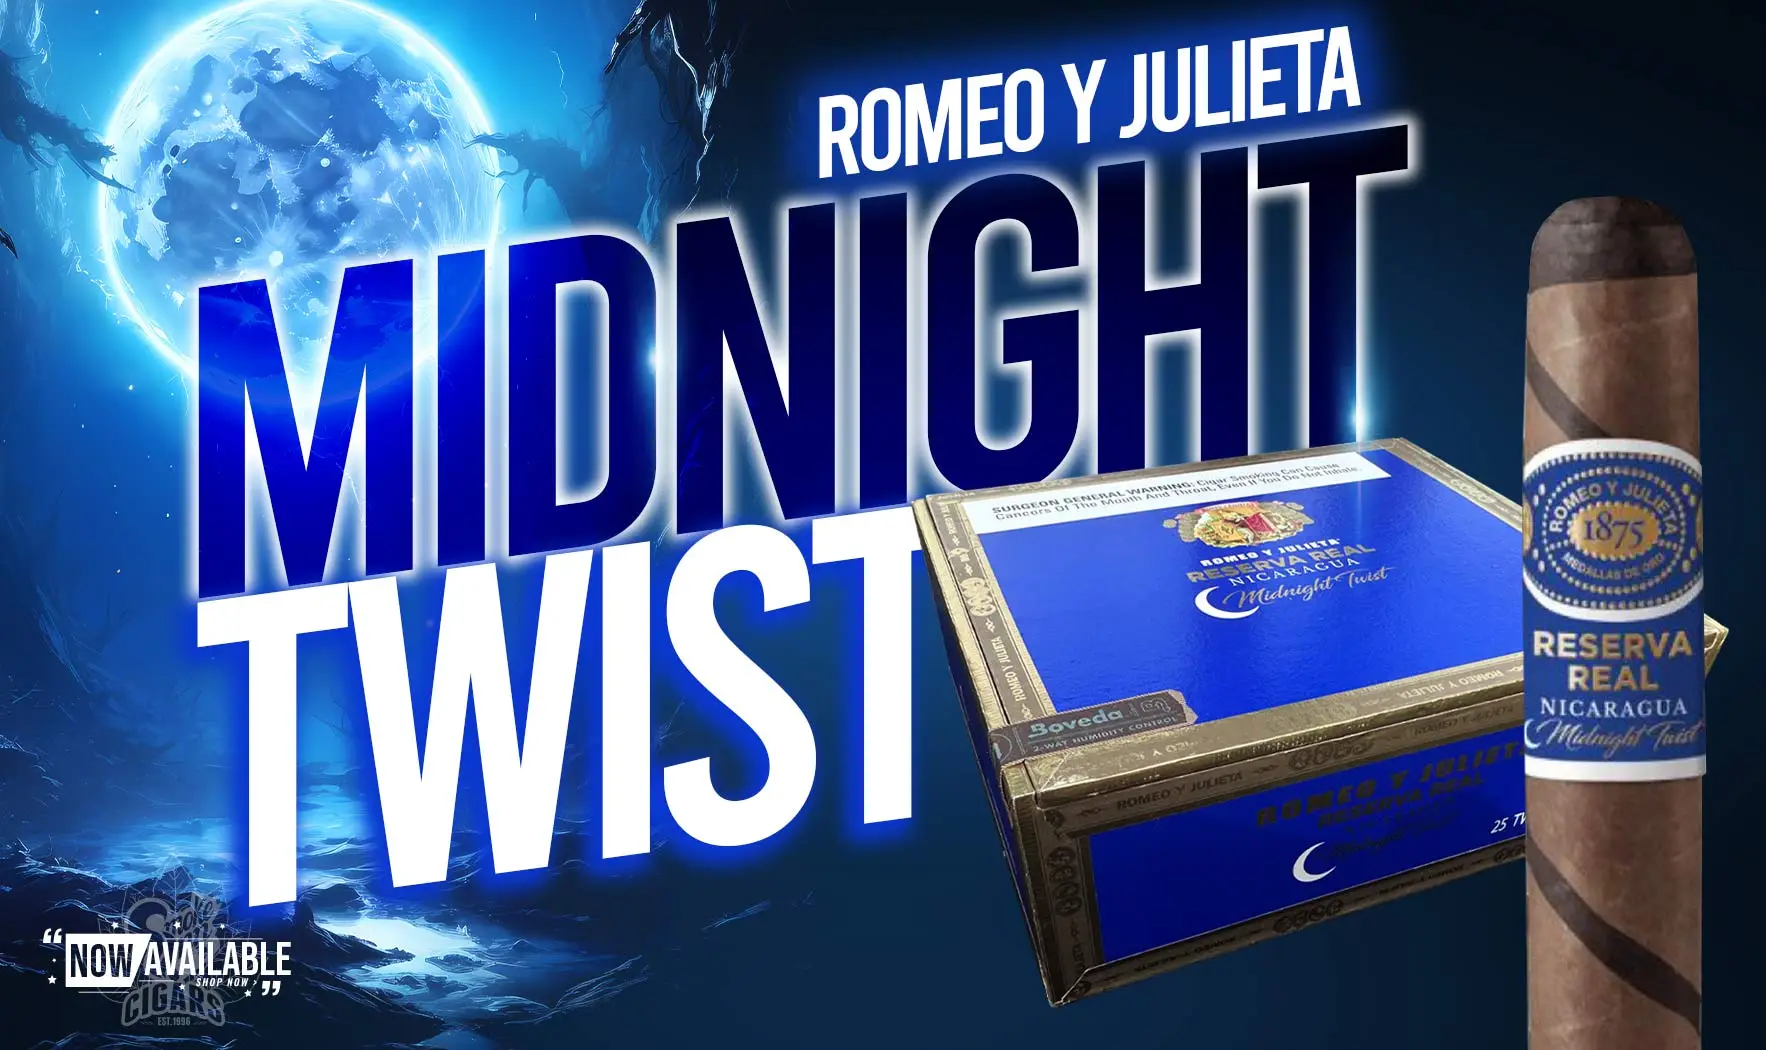 Romeo Y Julieta Reserva Nicaragua Midnight Twist